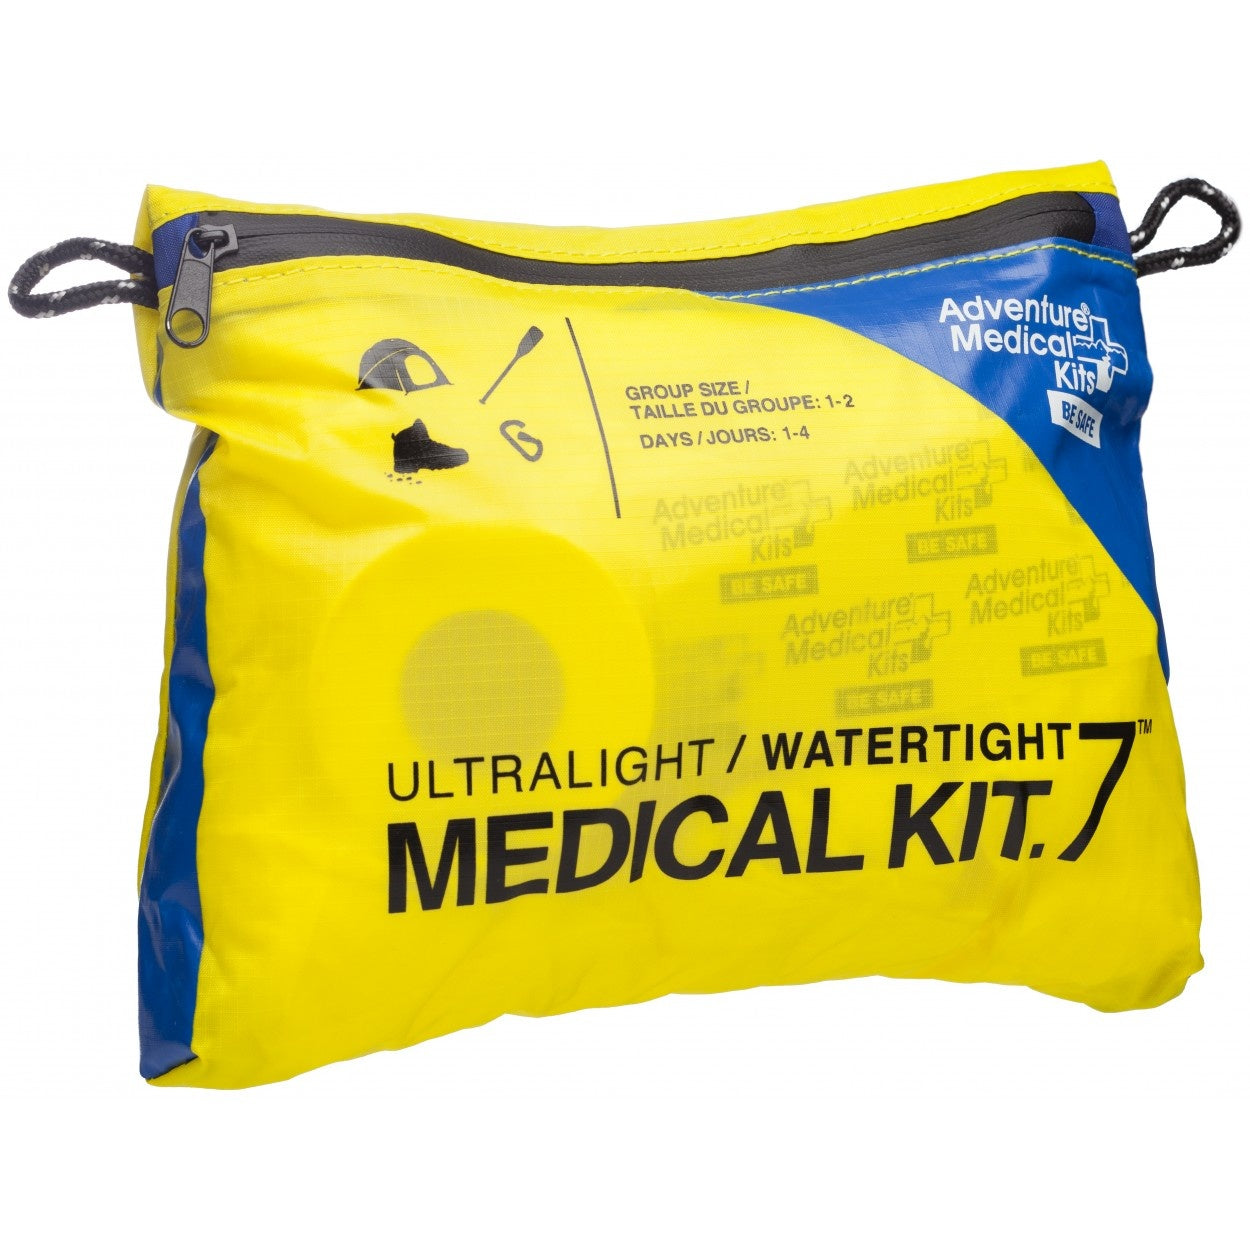 Adventure Medical Kits Ultralight Medical Kit .7